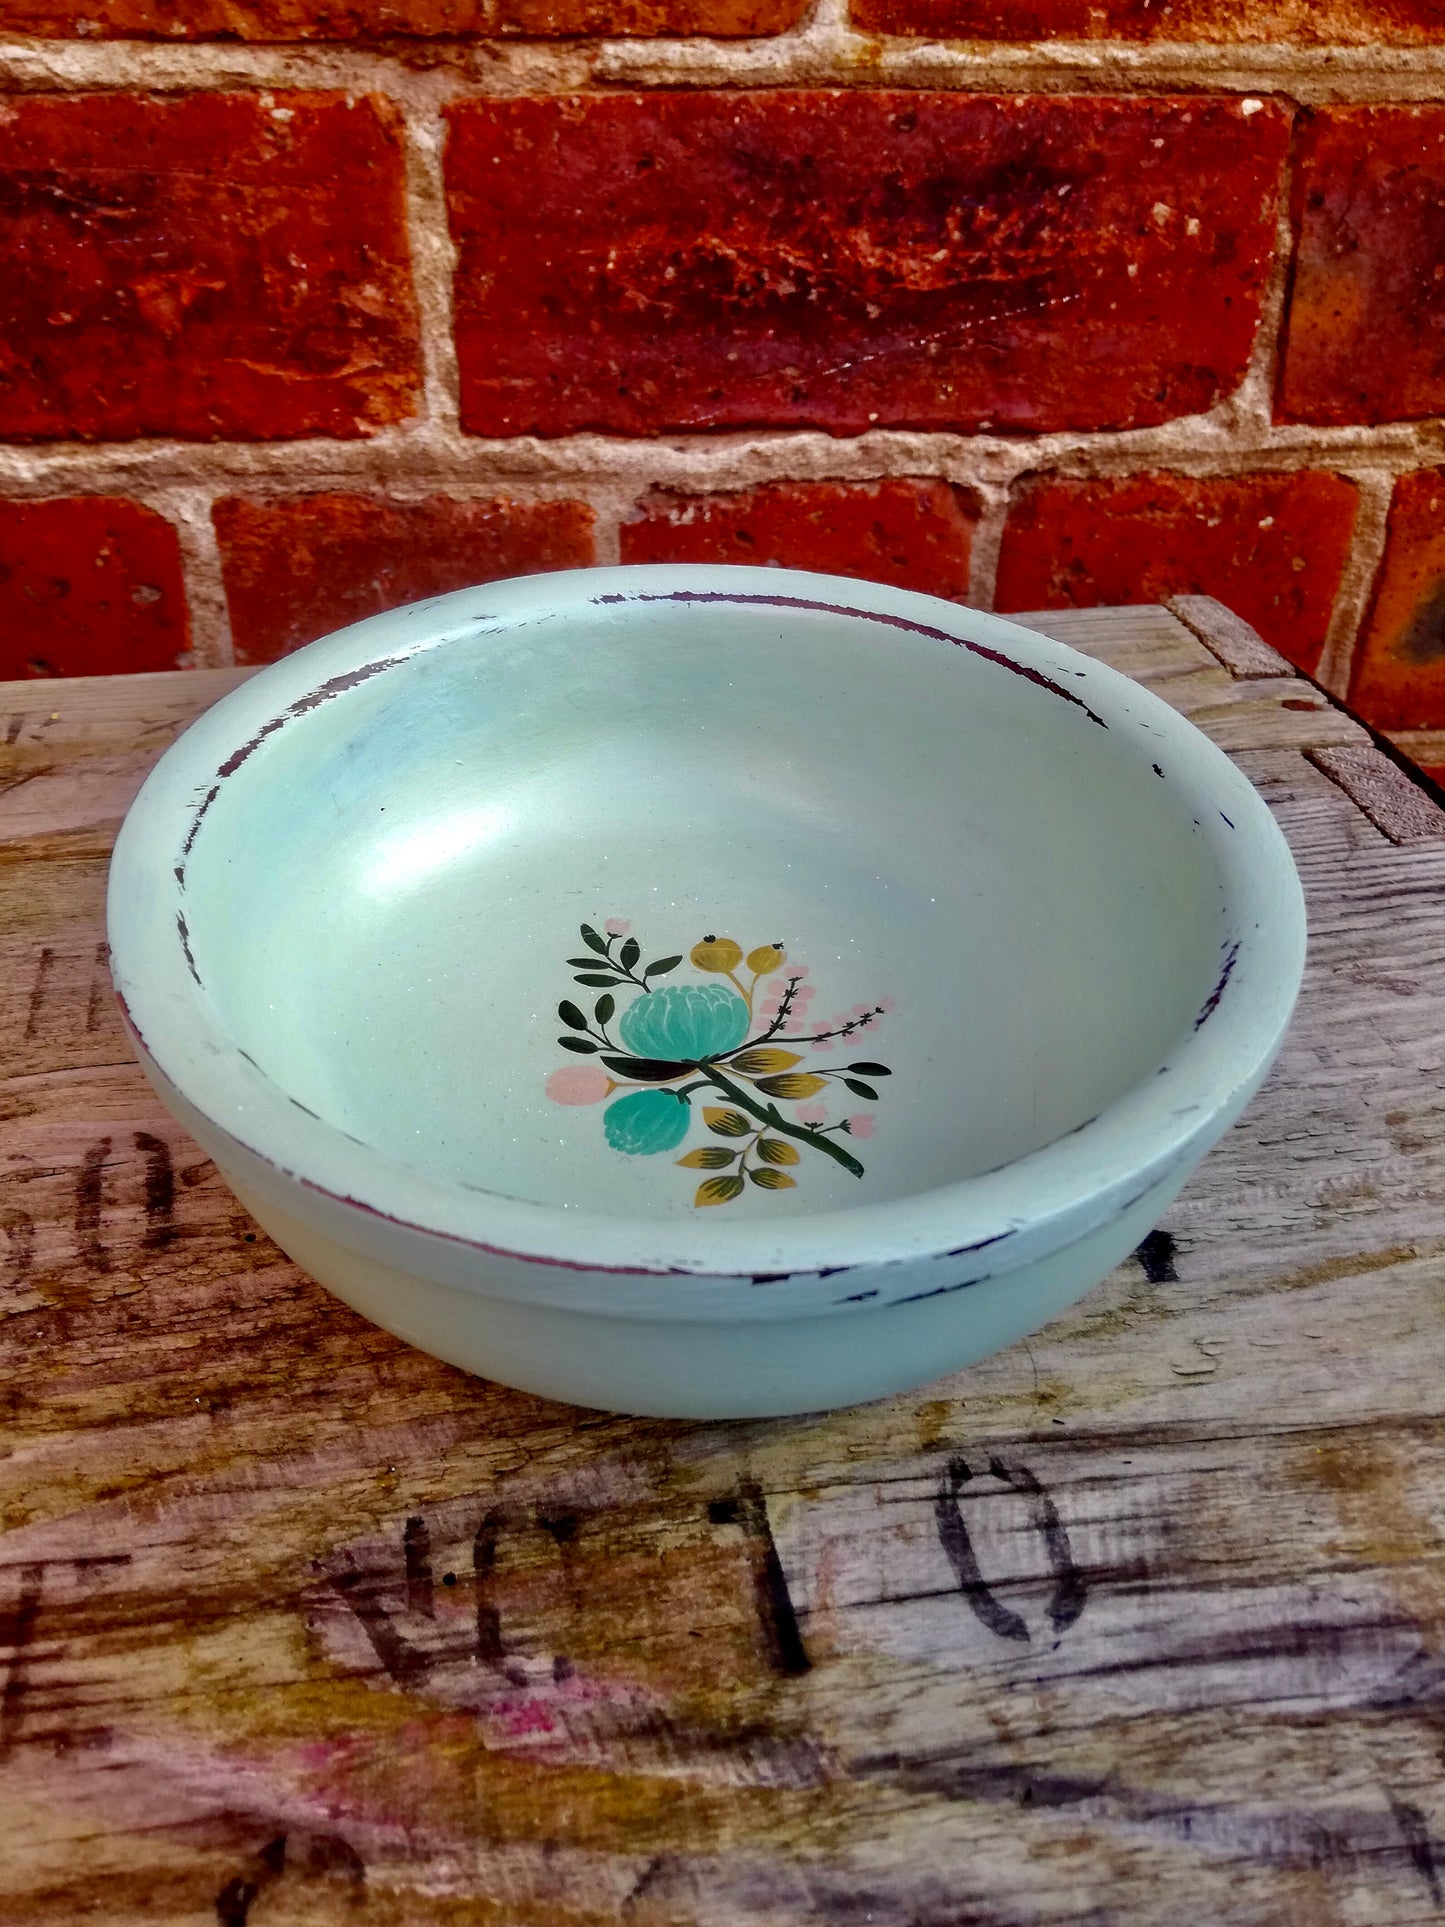 Painted decorative wooden bowl/ trinket dish